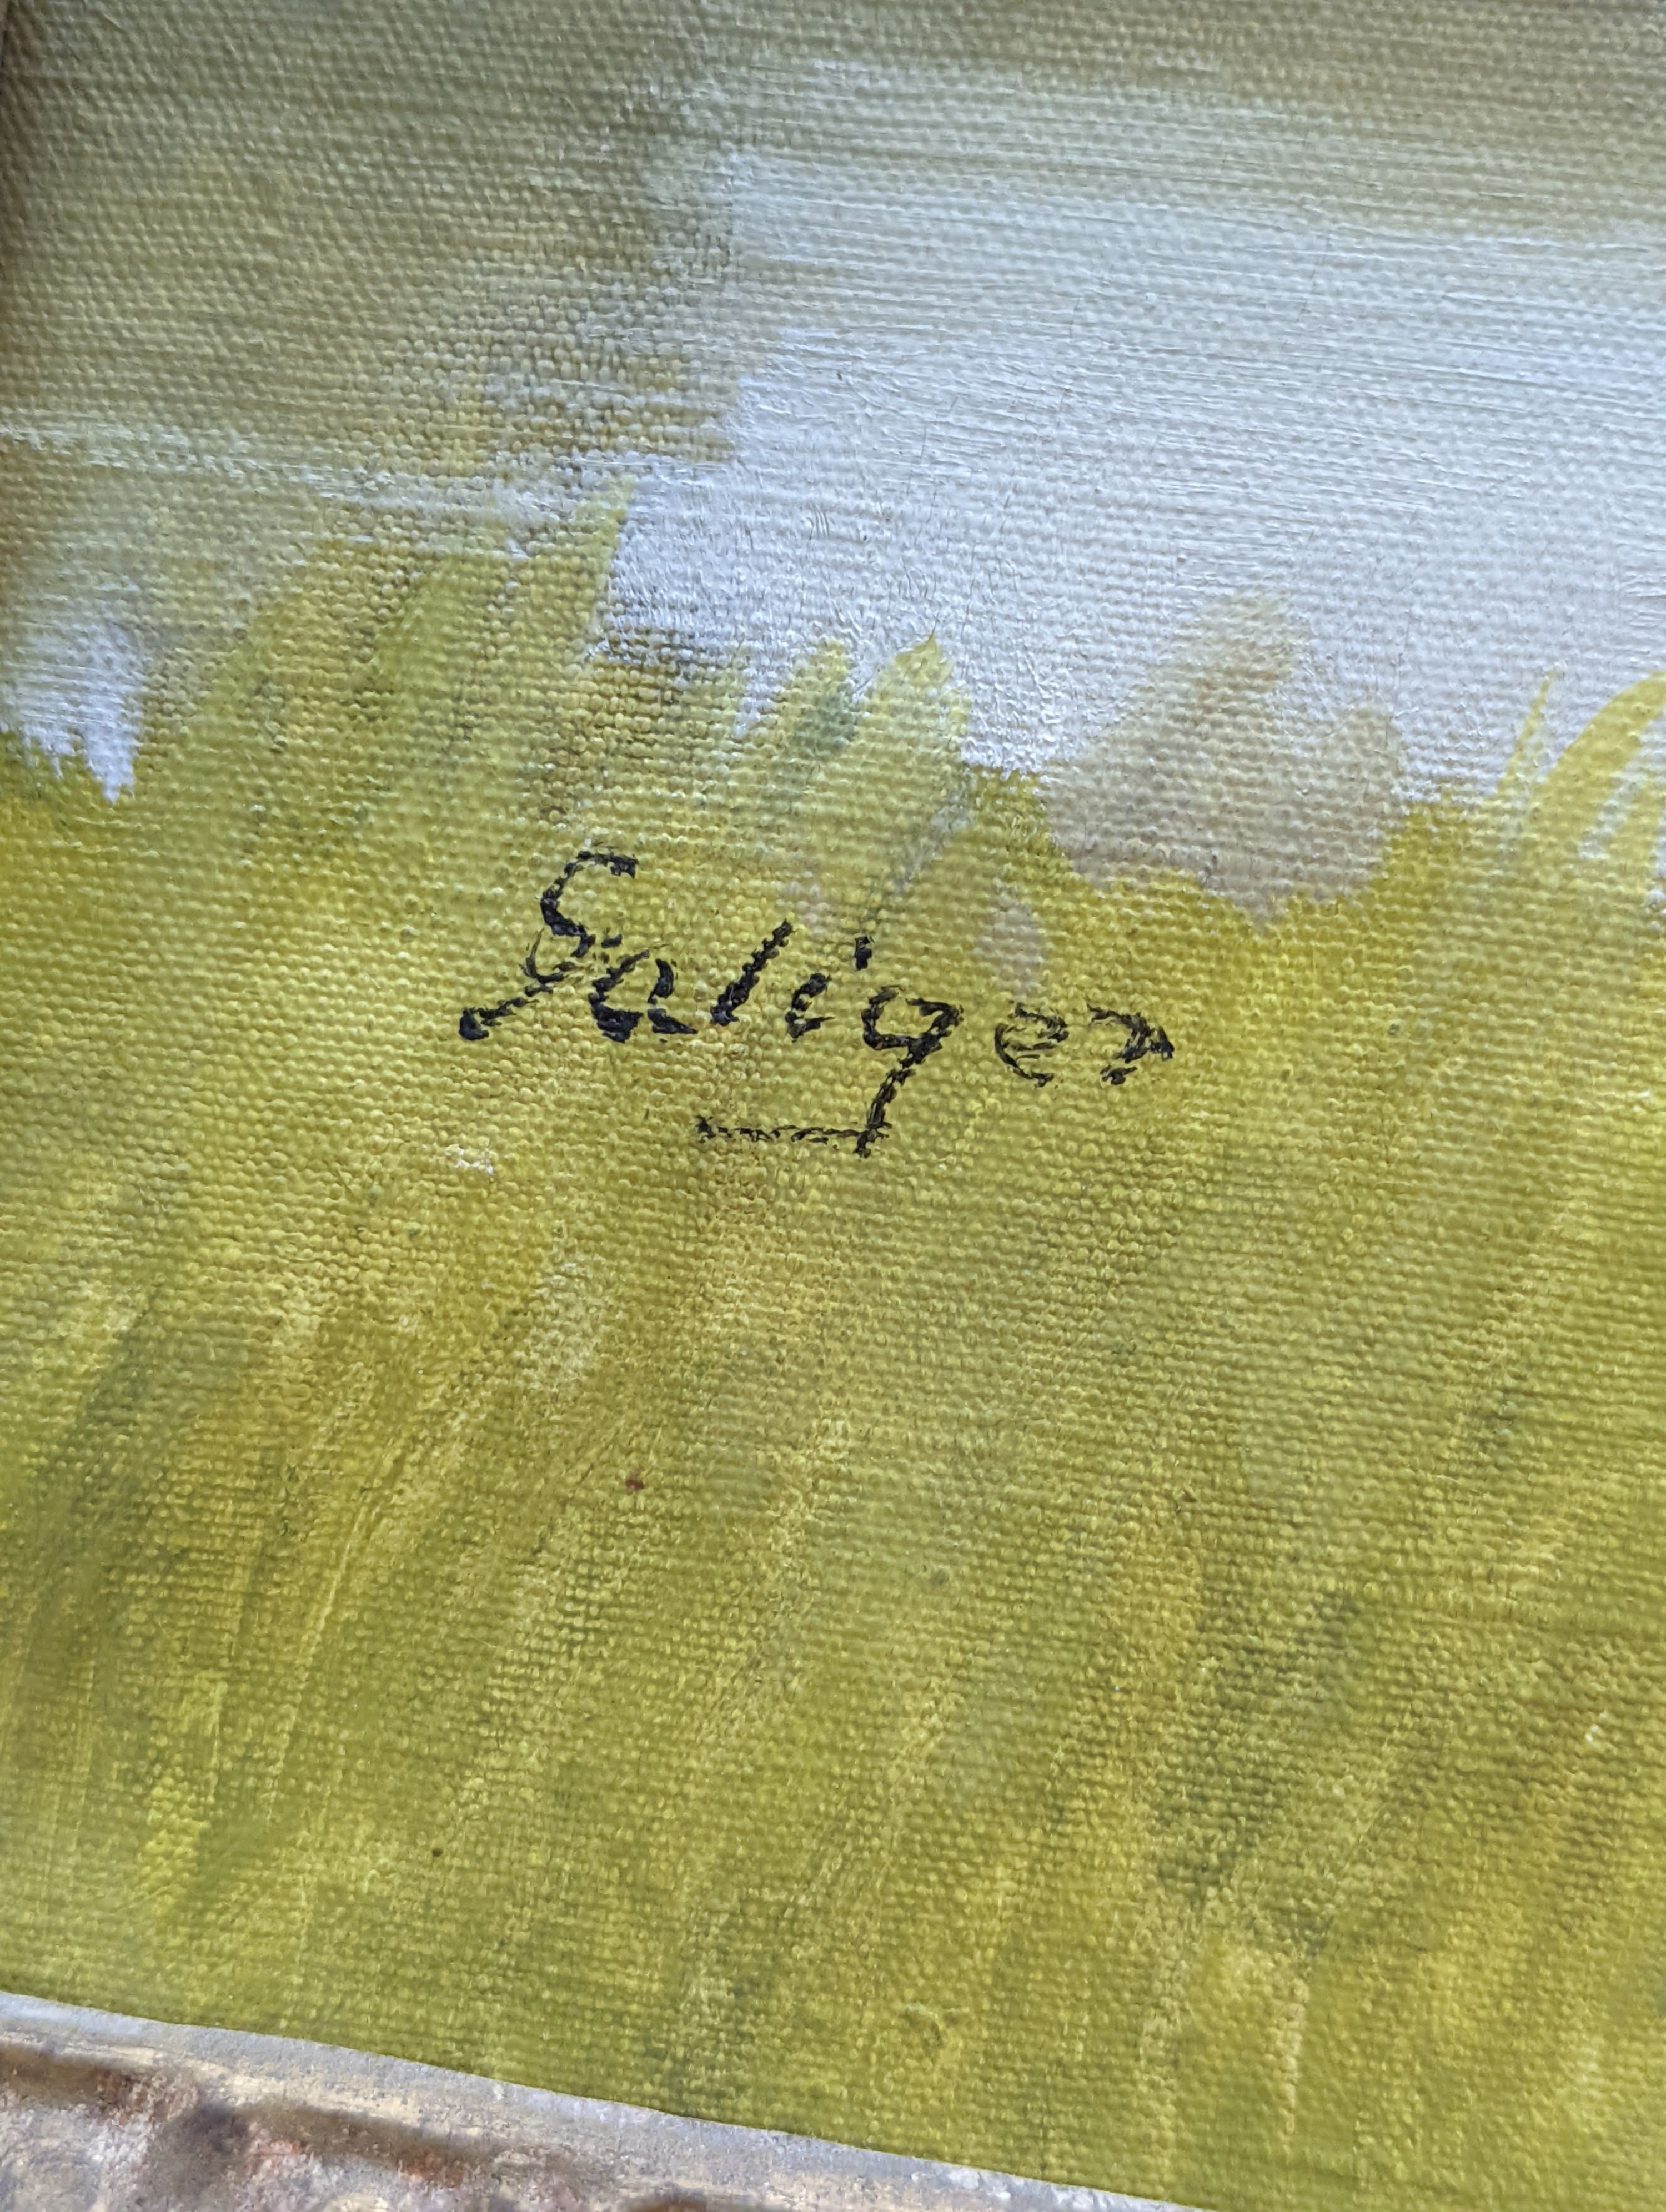 Fritz Saliger (Austrian, 1896-1975), oil on canvas, Birch trees in a summer landscape, signed, 60 x 75cm 100-200